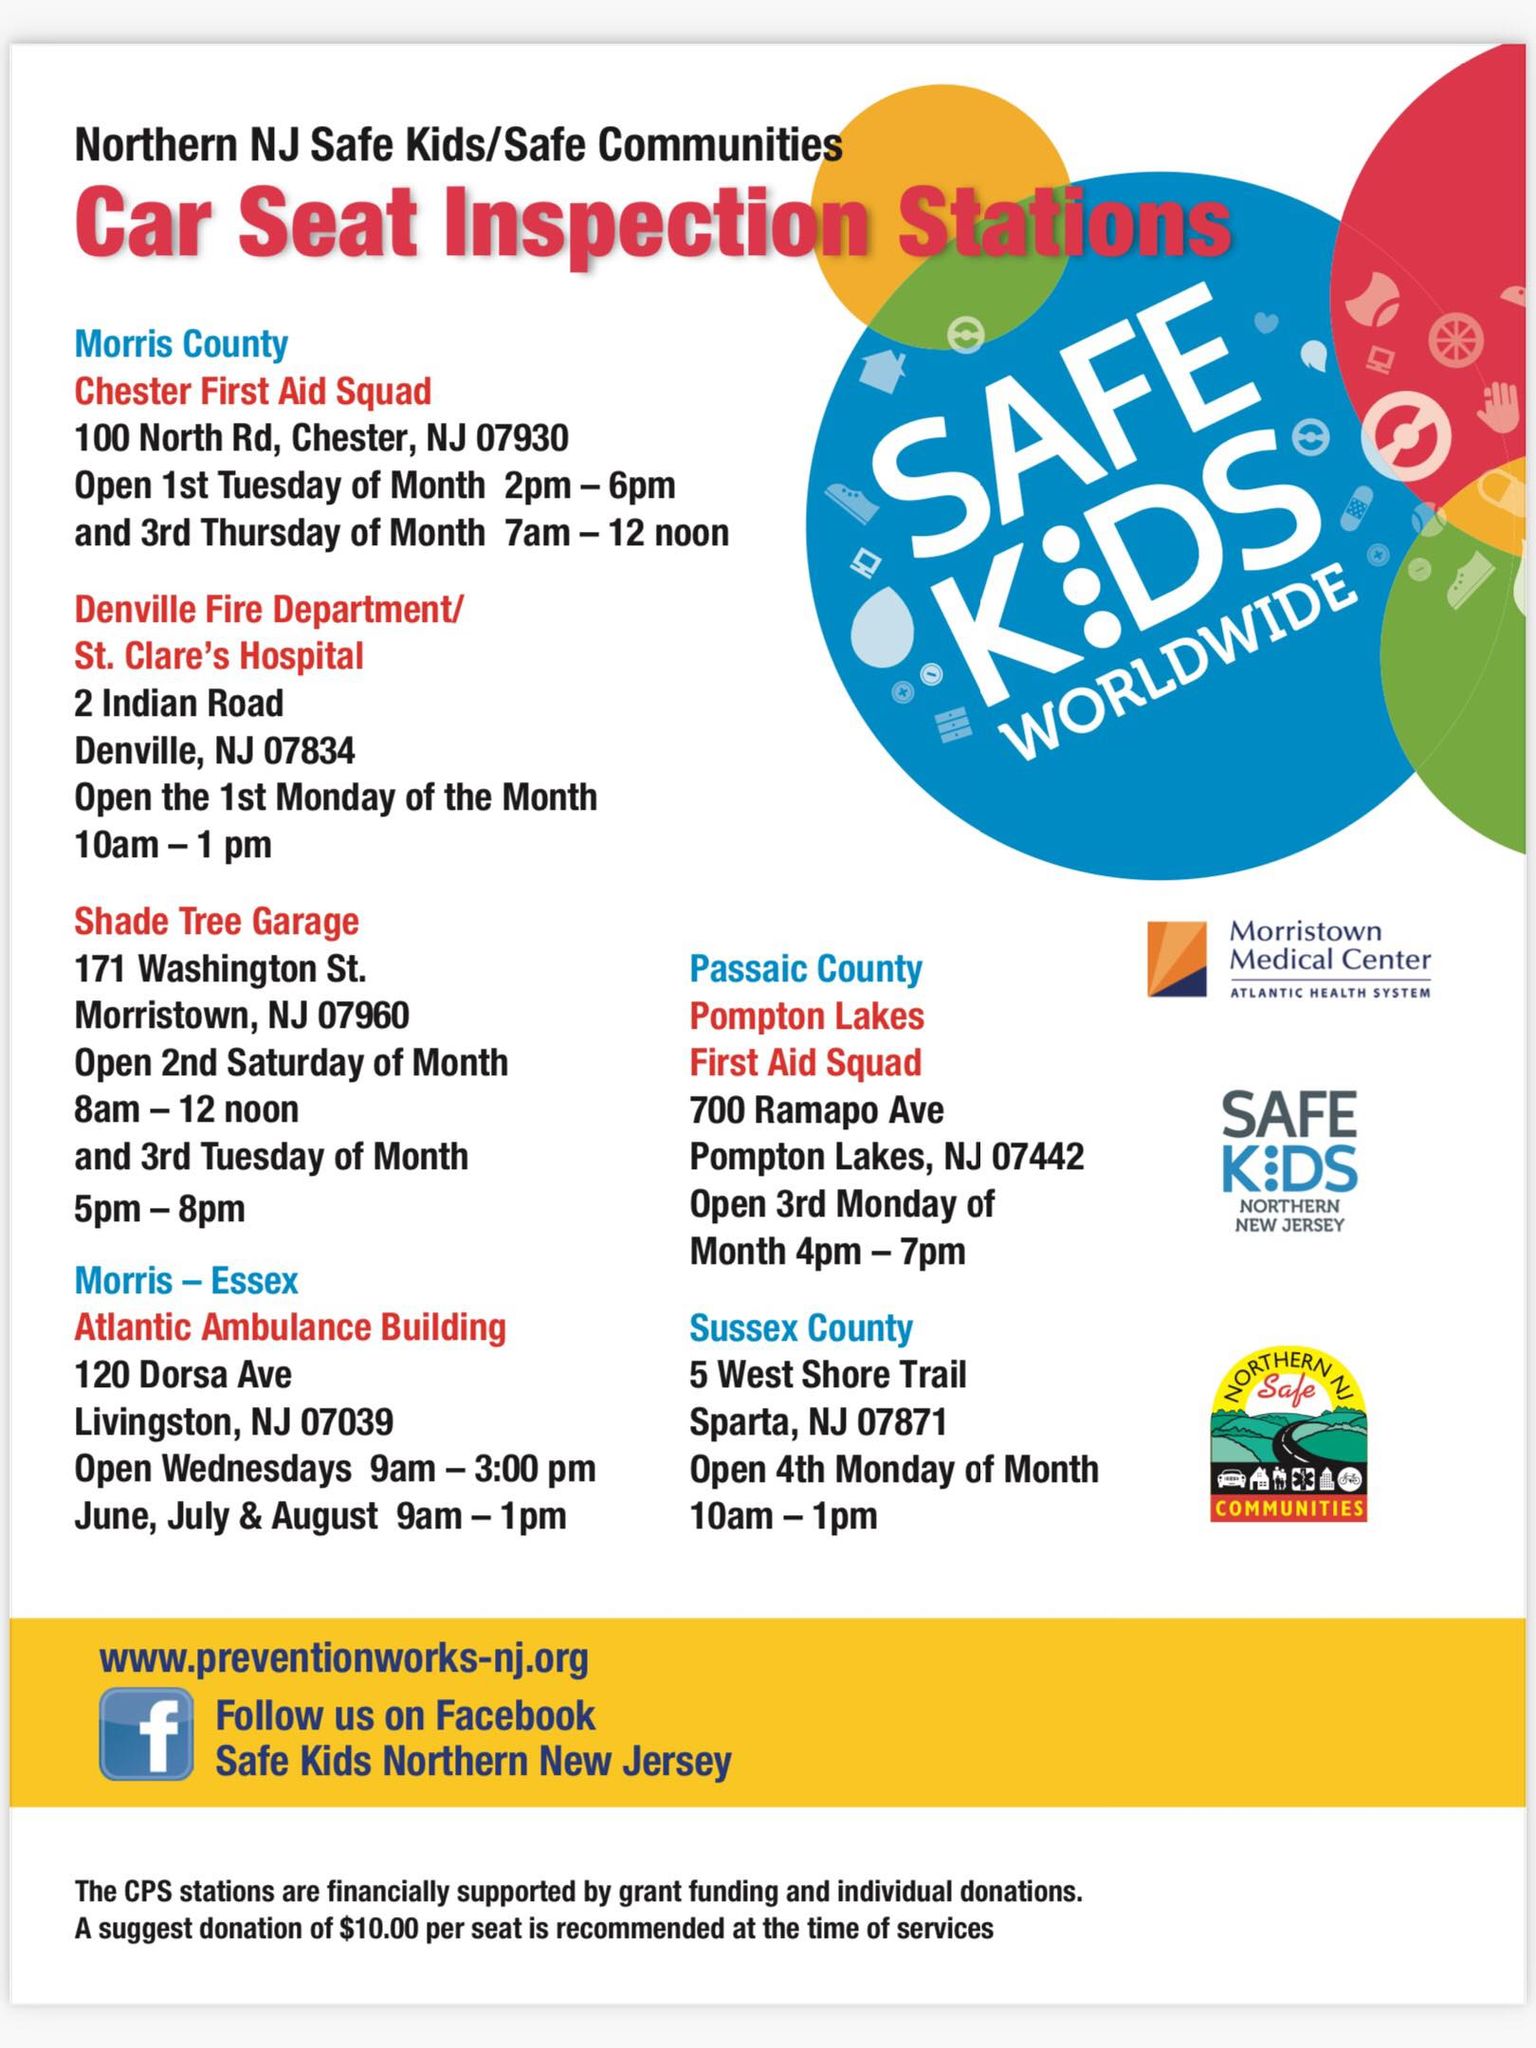 UP: Safe Kids Worldwide